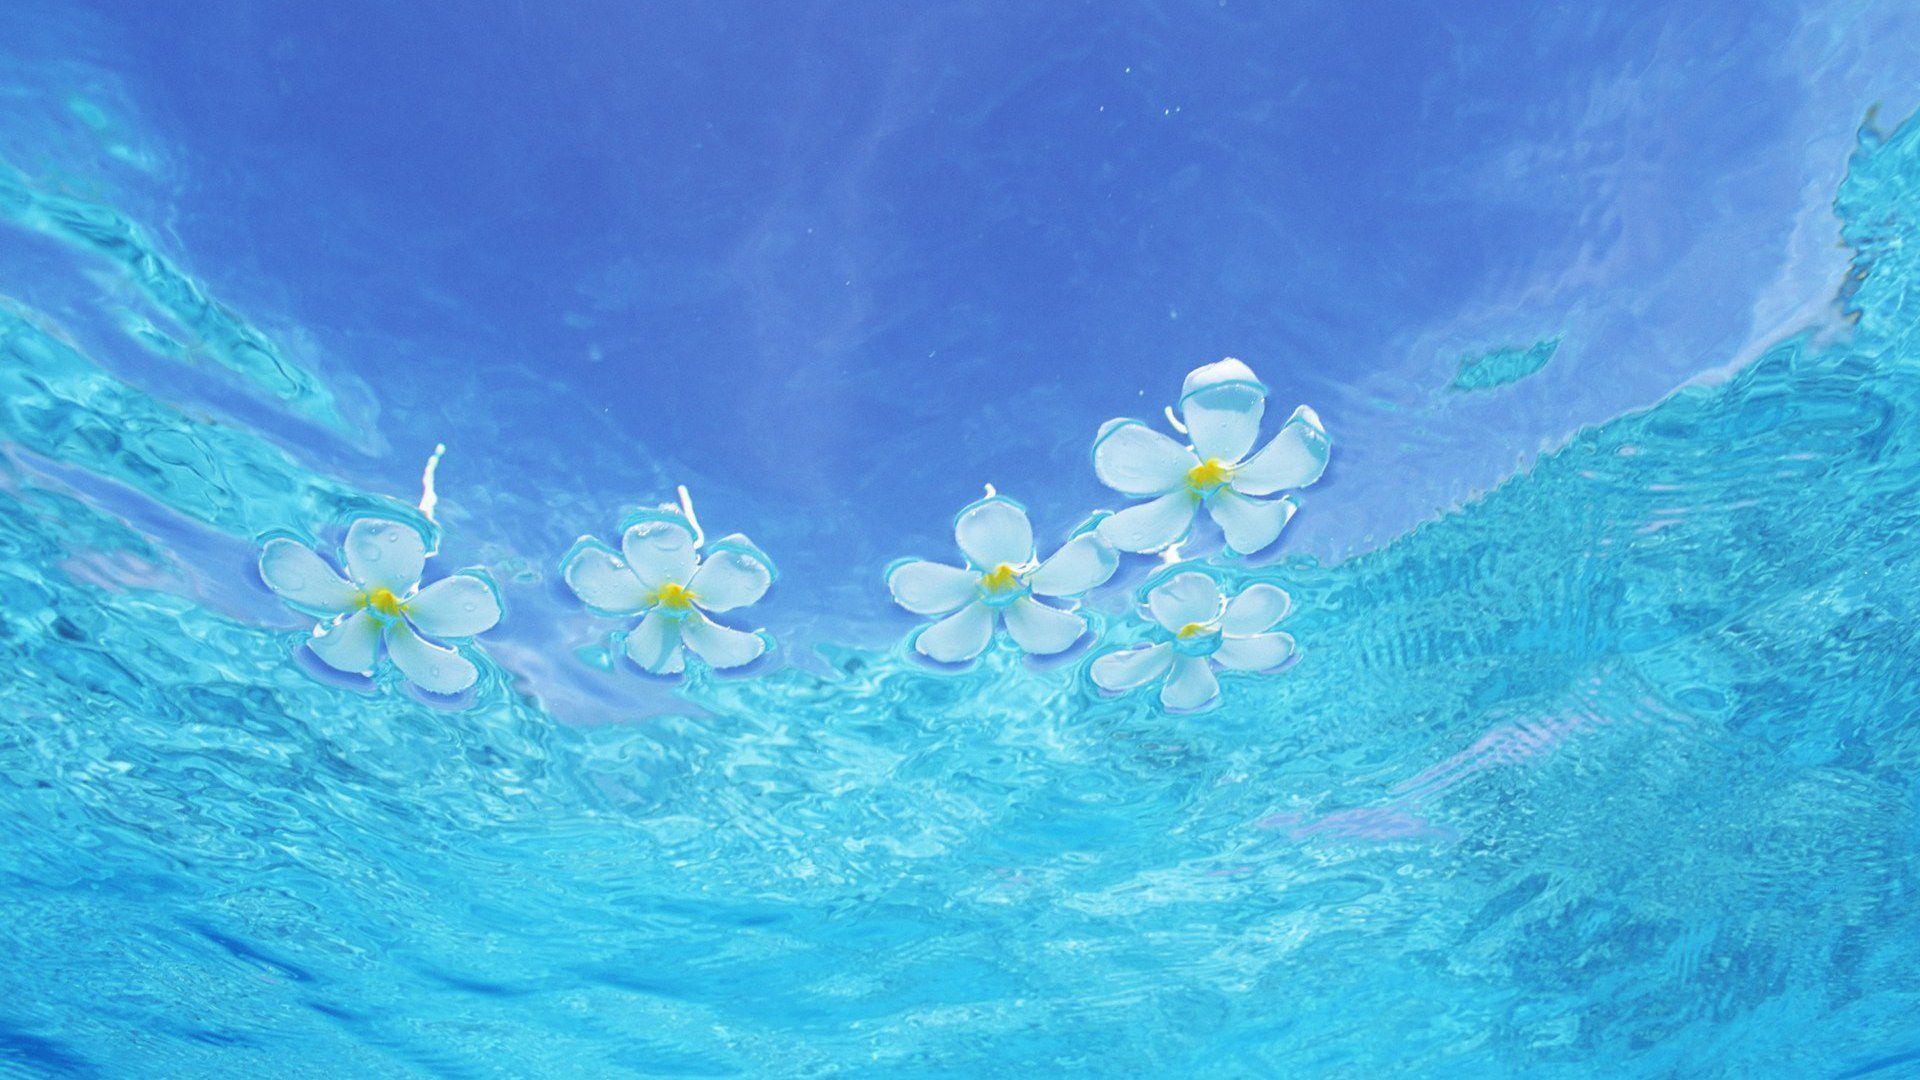 Cool 3D Water Wallpaper Free Download